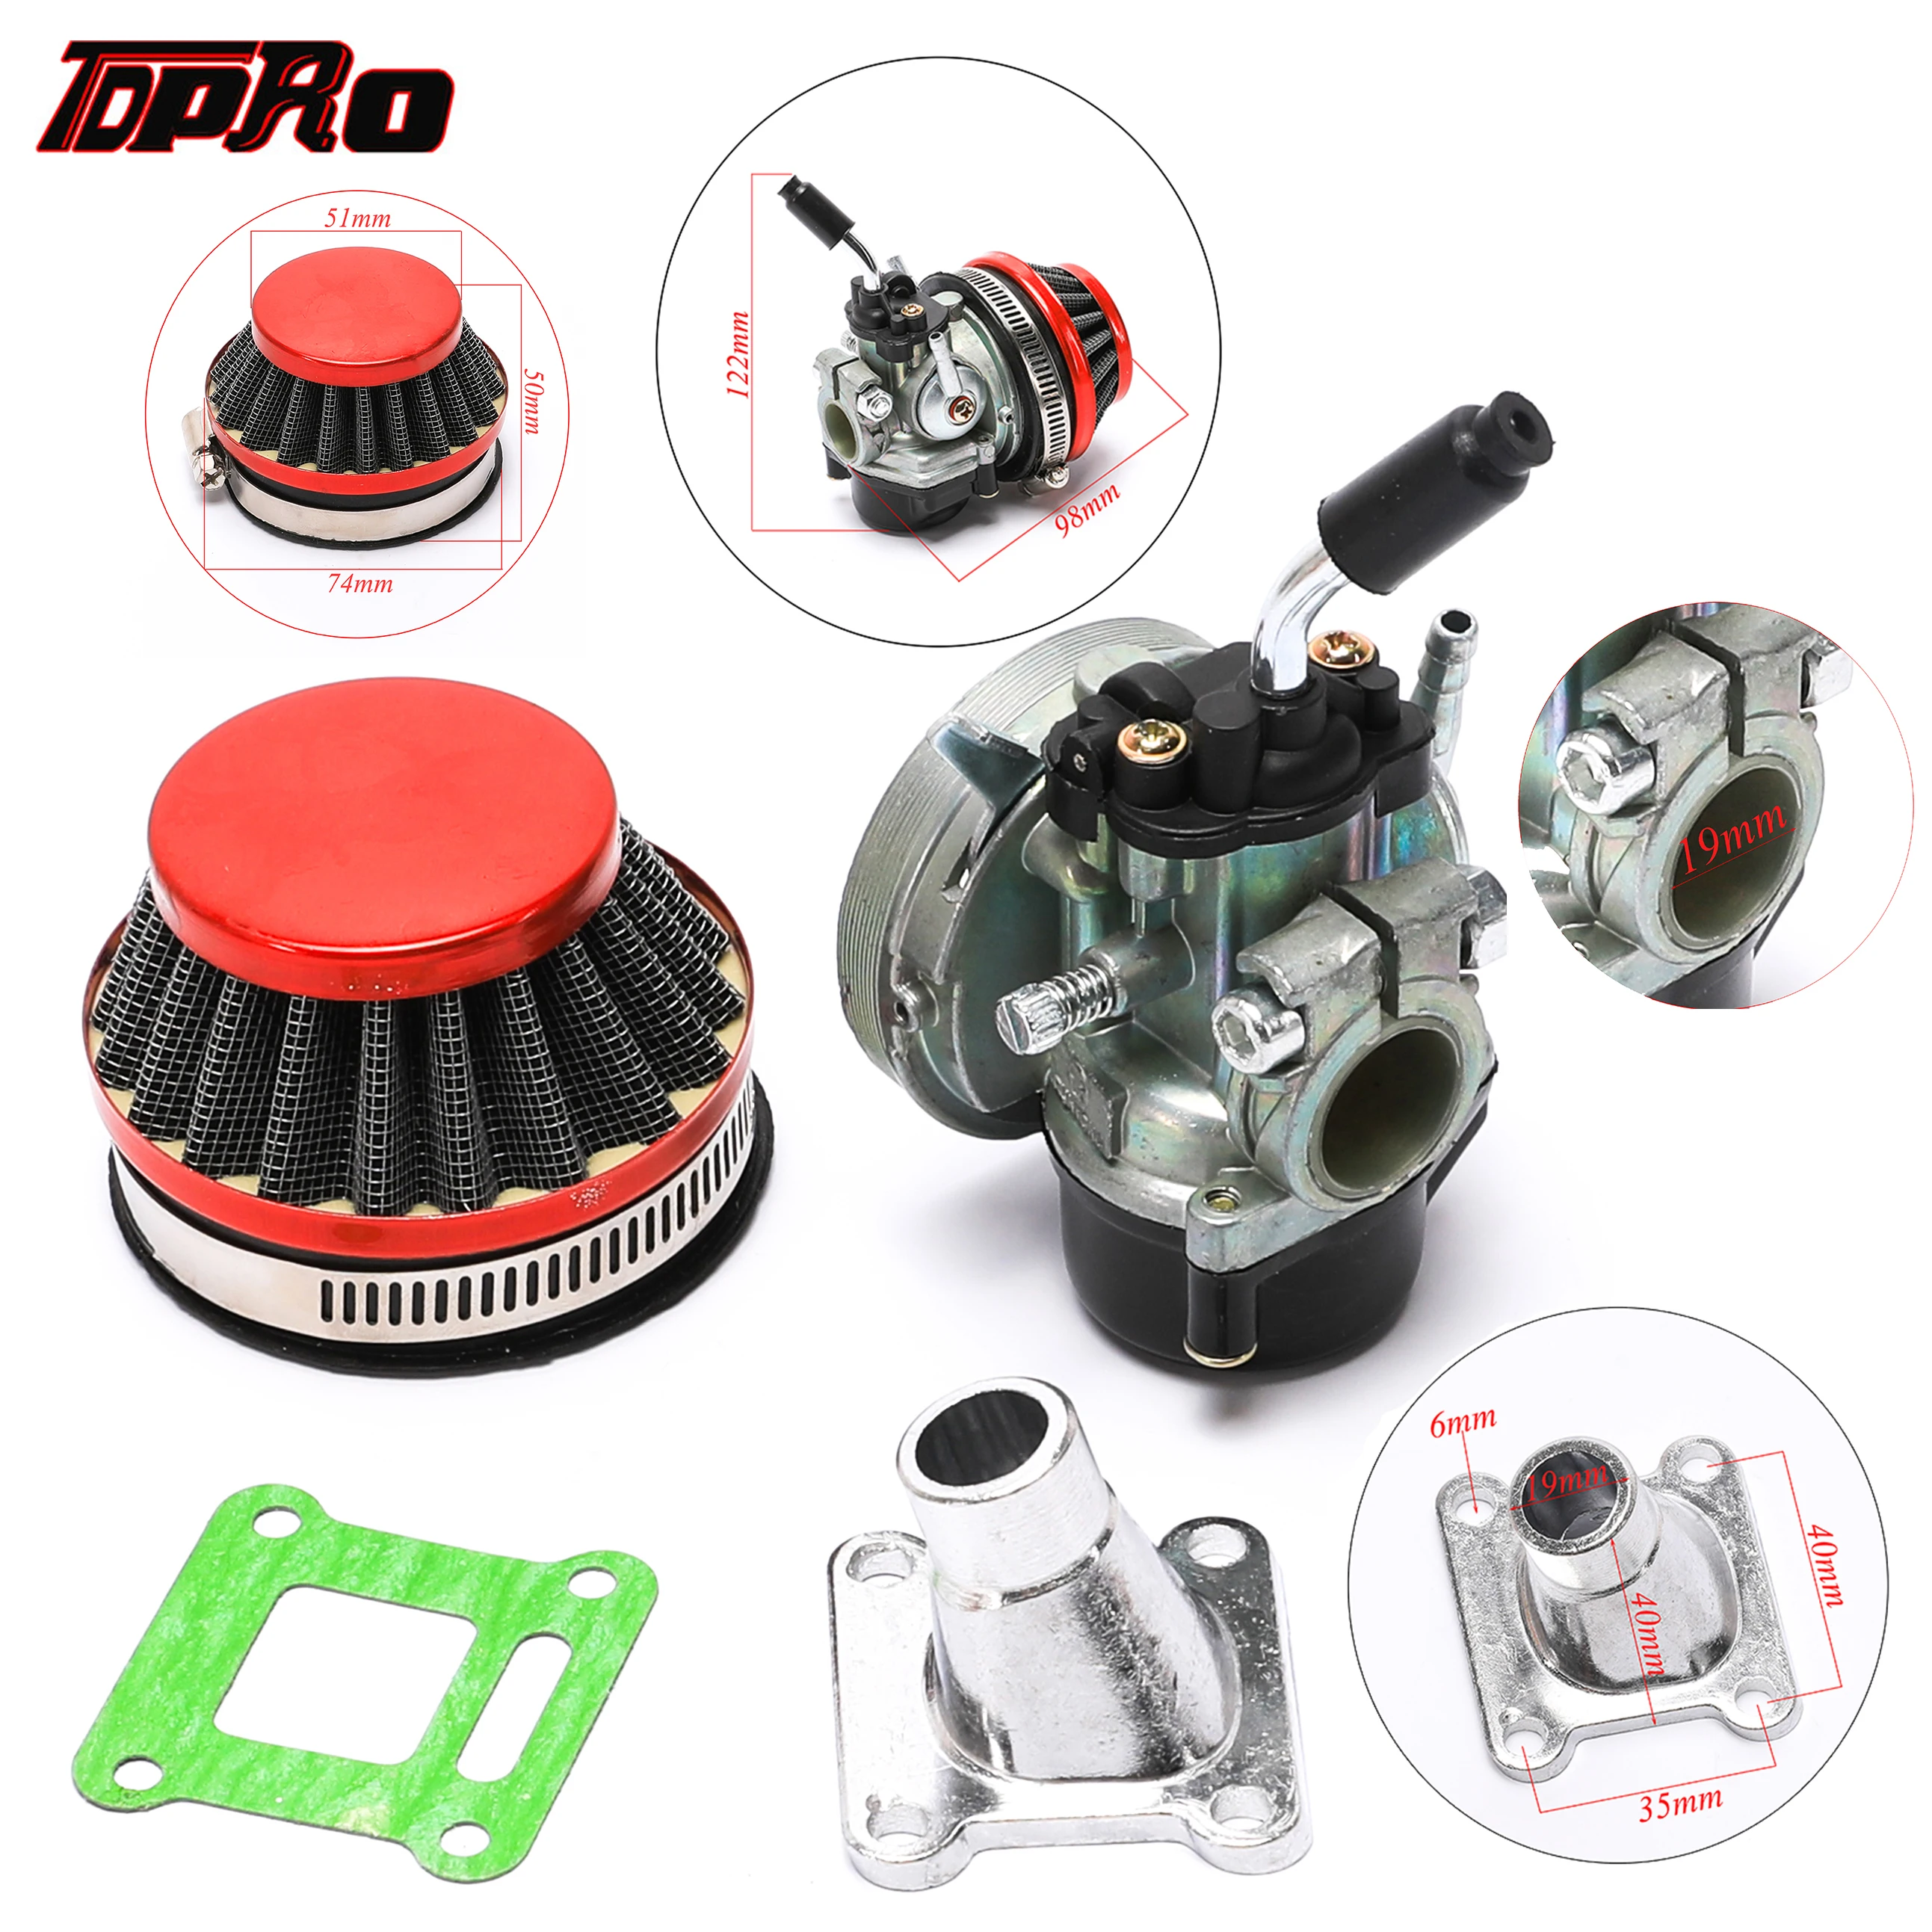 

TDPRO 19mm Racing Carburetor + Air Filter For Motorcycle 2 Stroke 49cc 66cc 70cc 80cc Engines Mini ATV Dirt Pocket Bike Go Kart